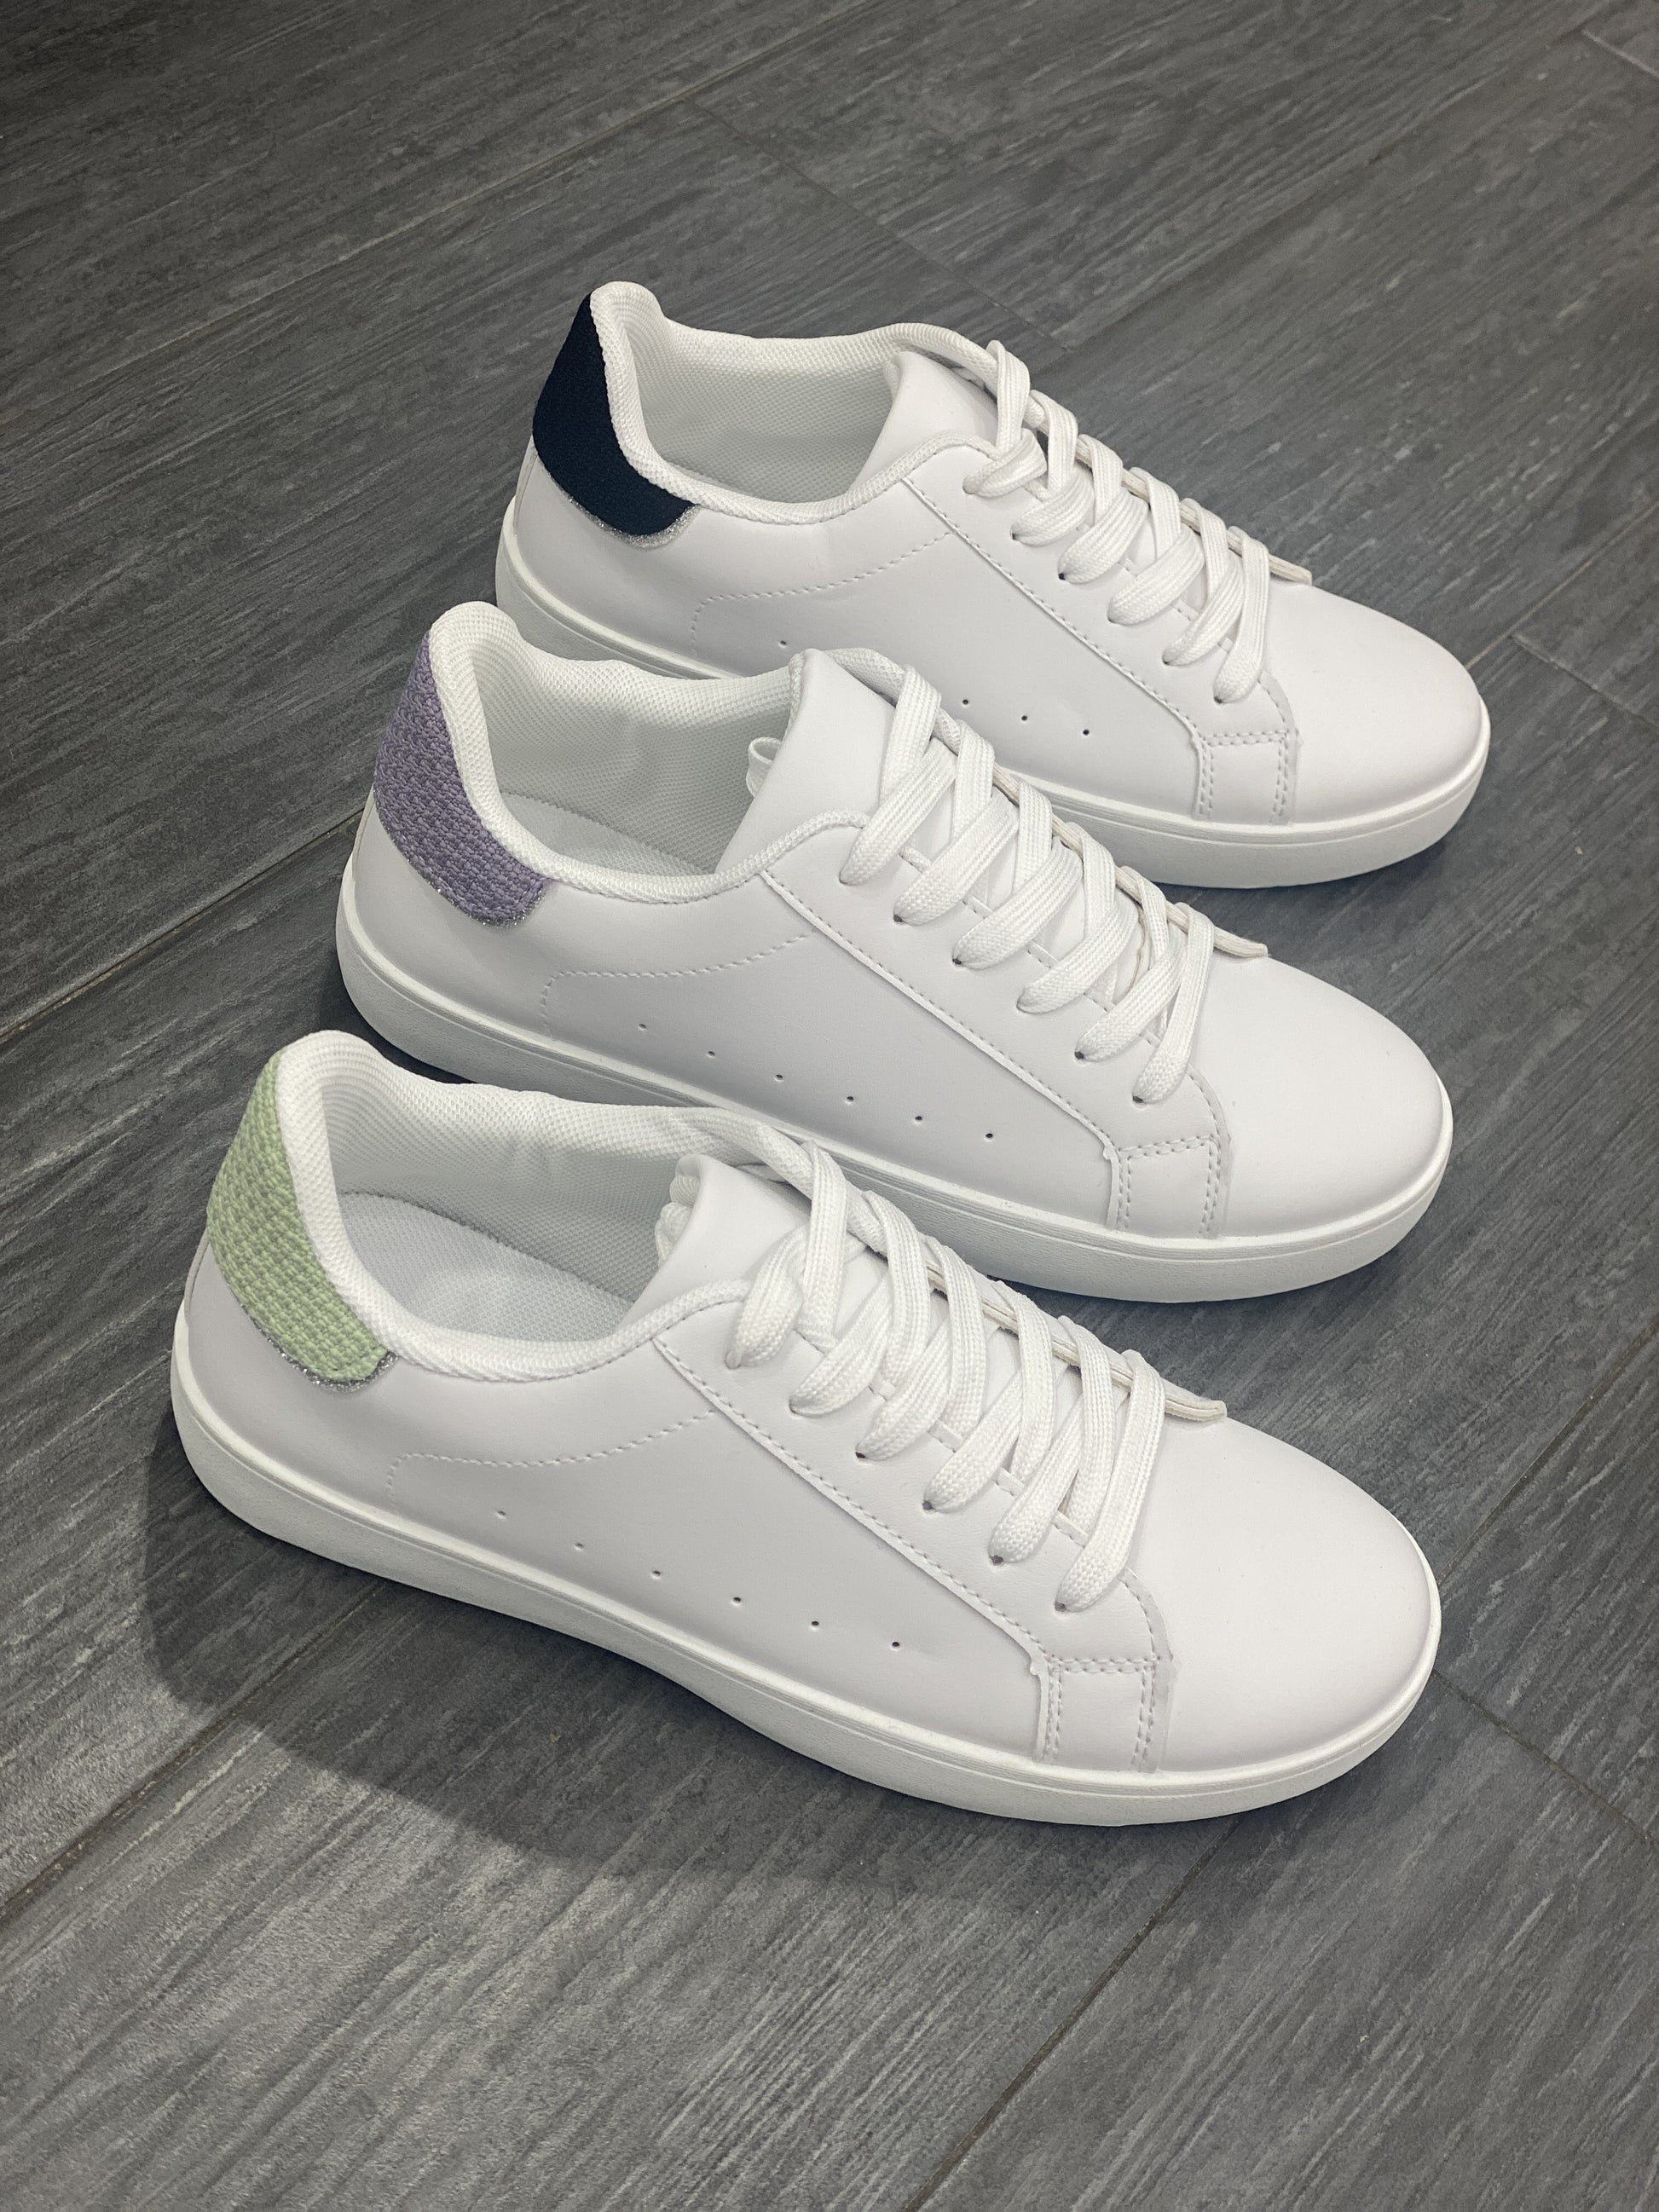 Luna Sneakers 8910 WHITE/VIOLET